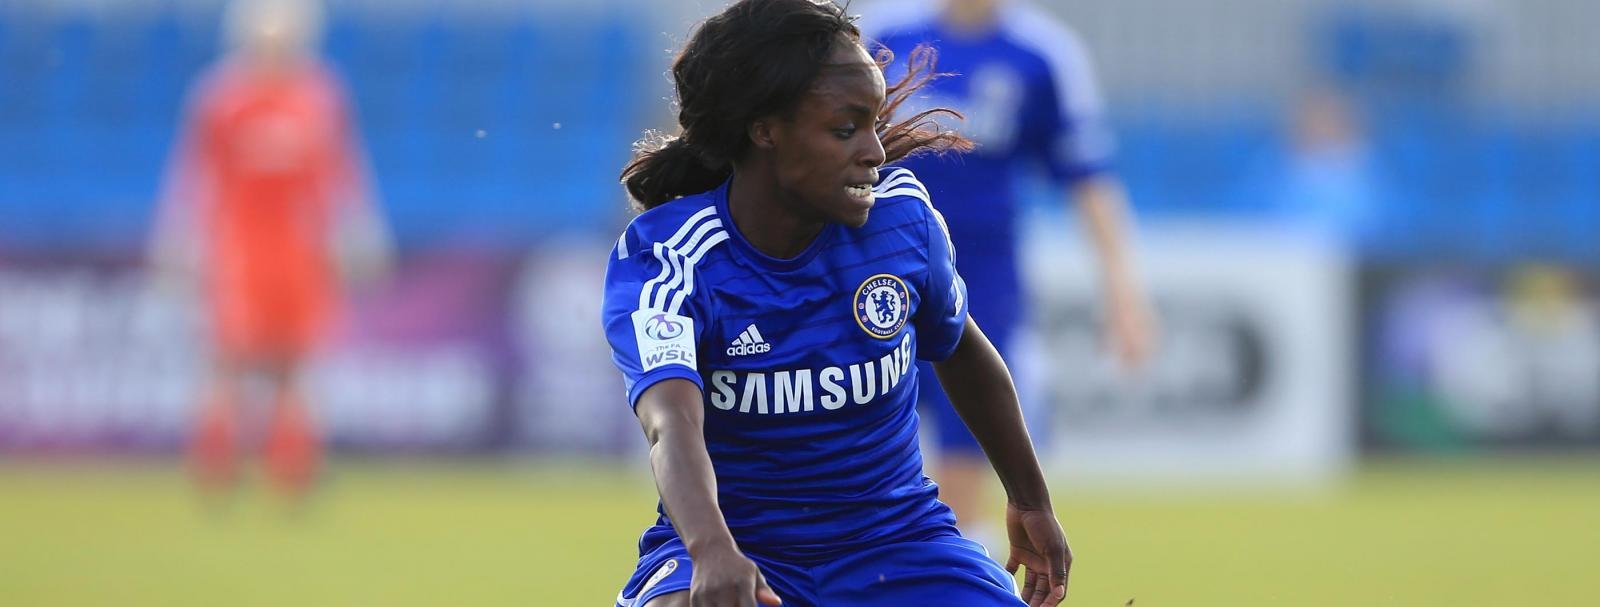 Profile: Chelsea Ladies and England striker Eni Aluko